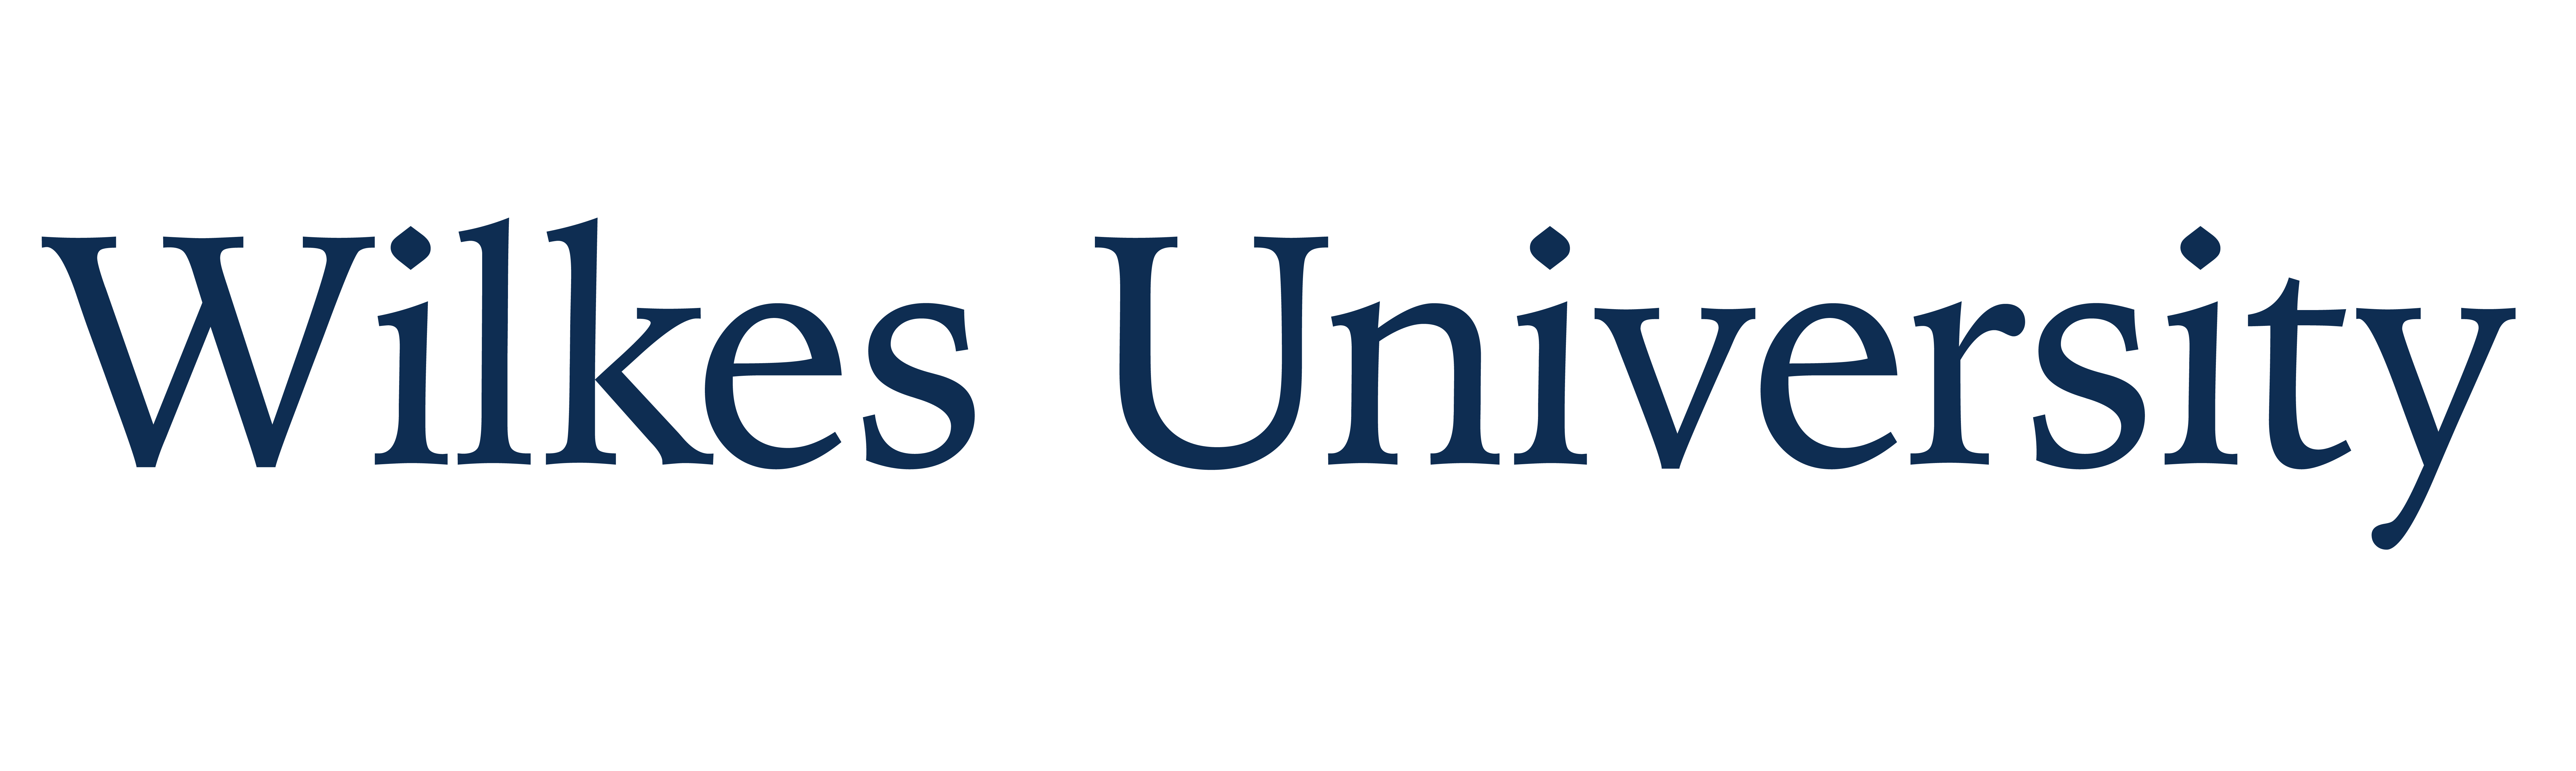 Wilkes University logo - horizontal with blue text